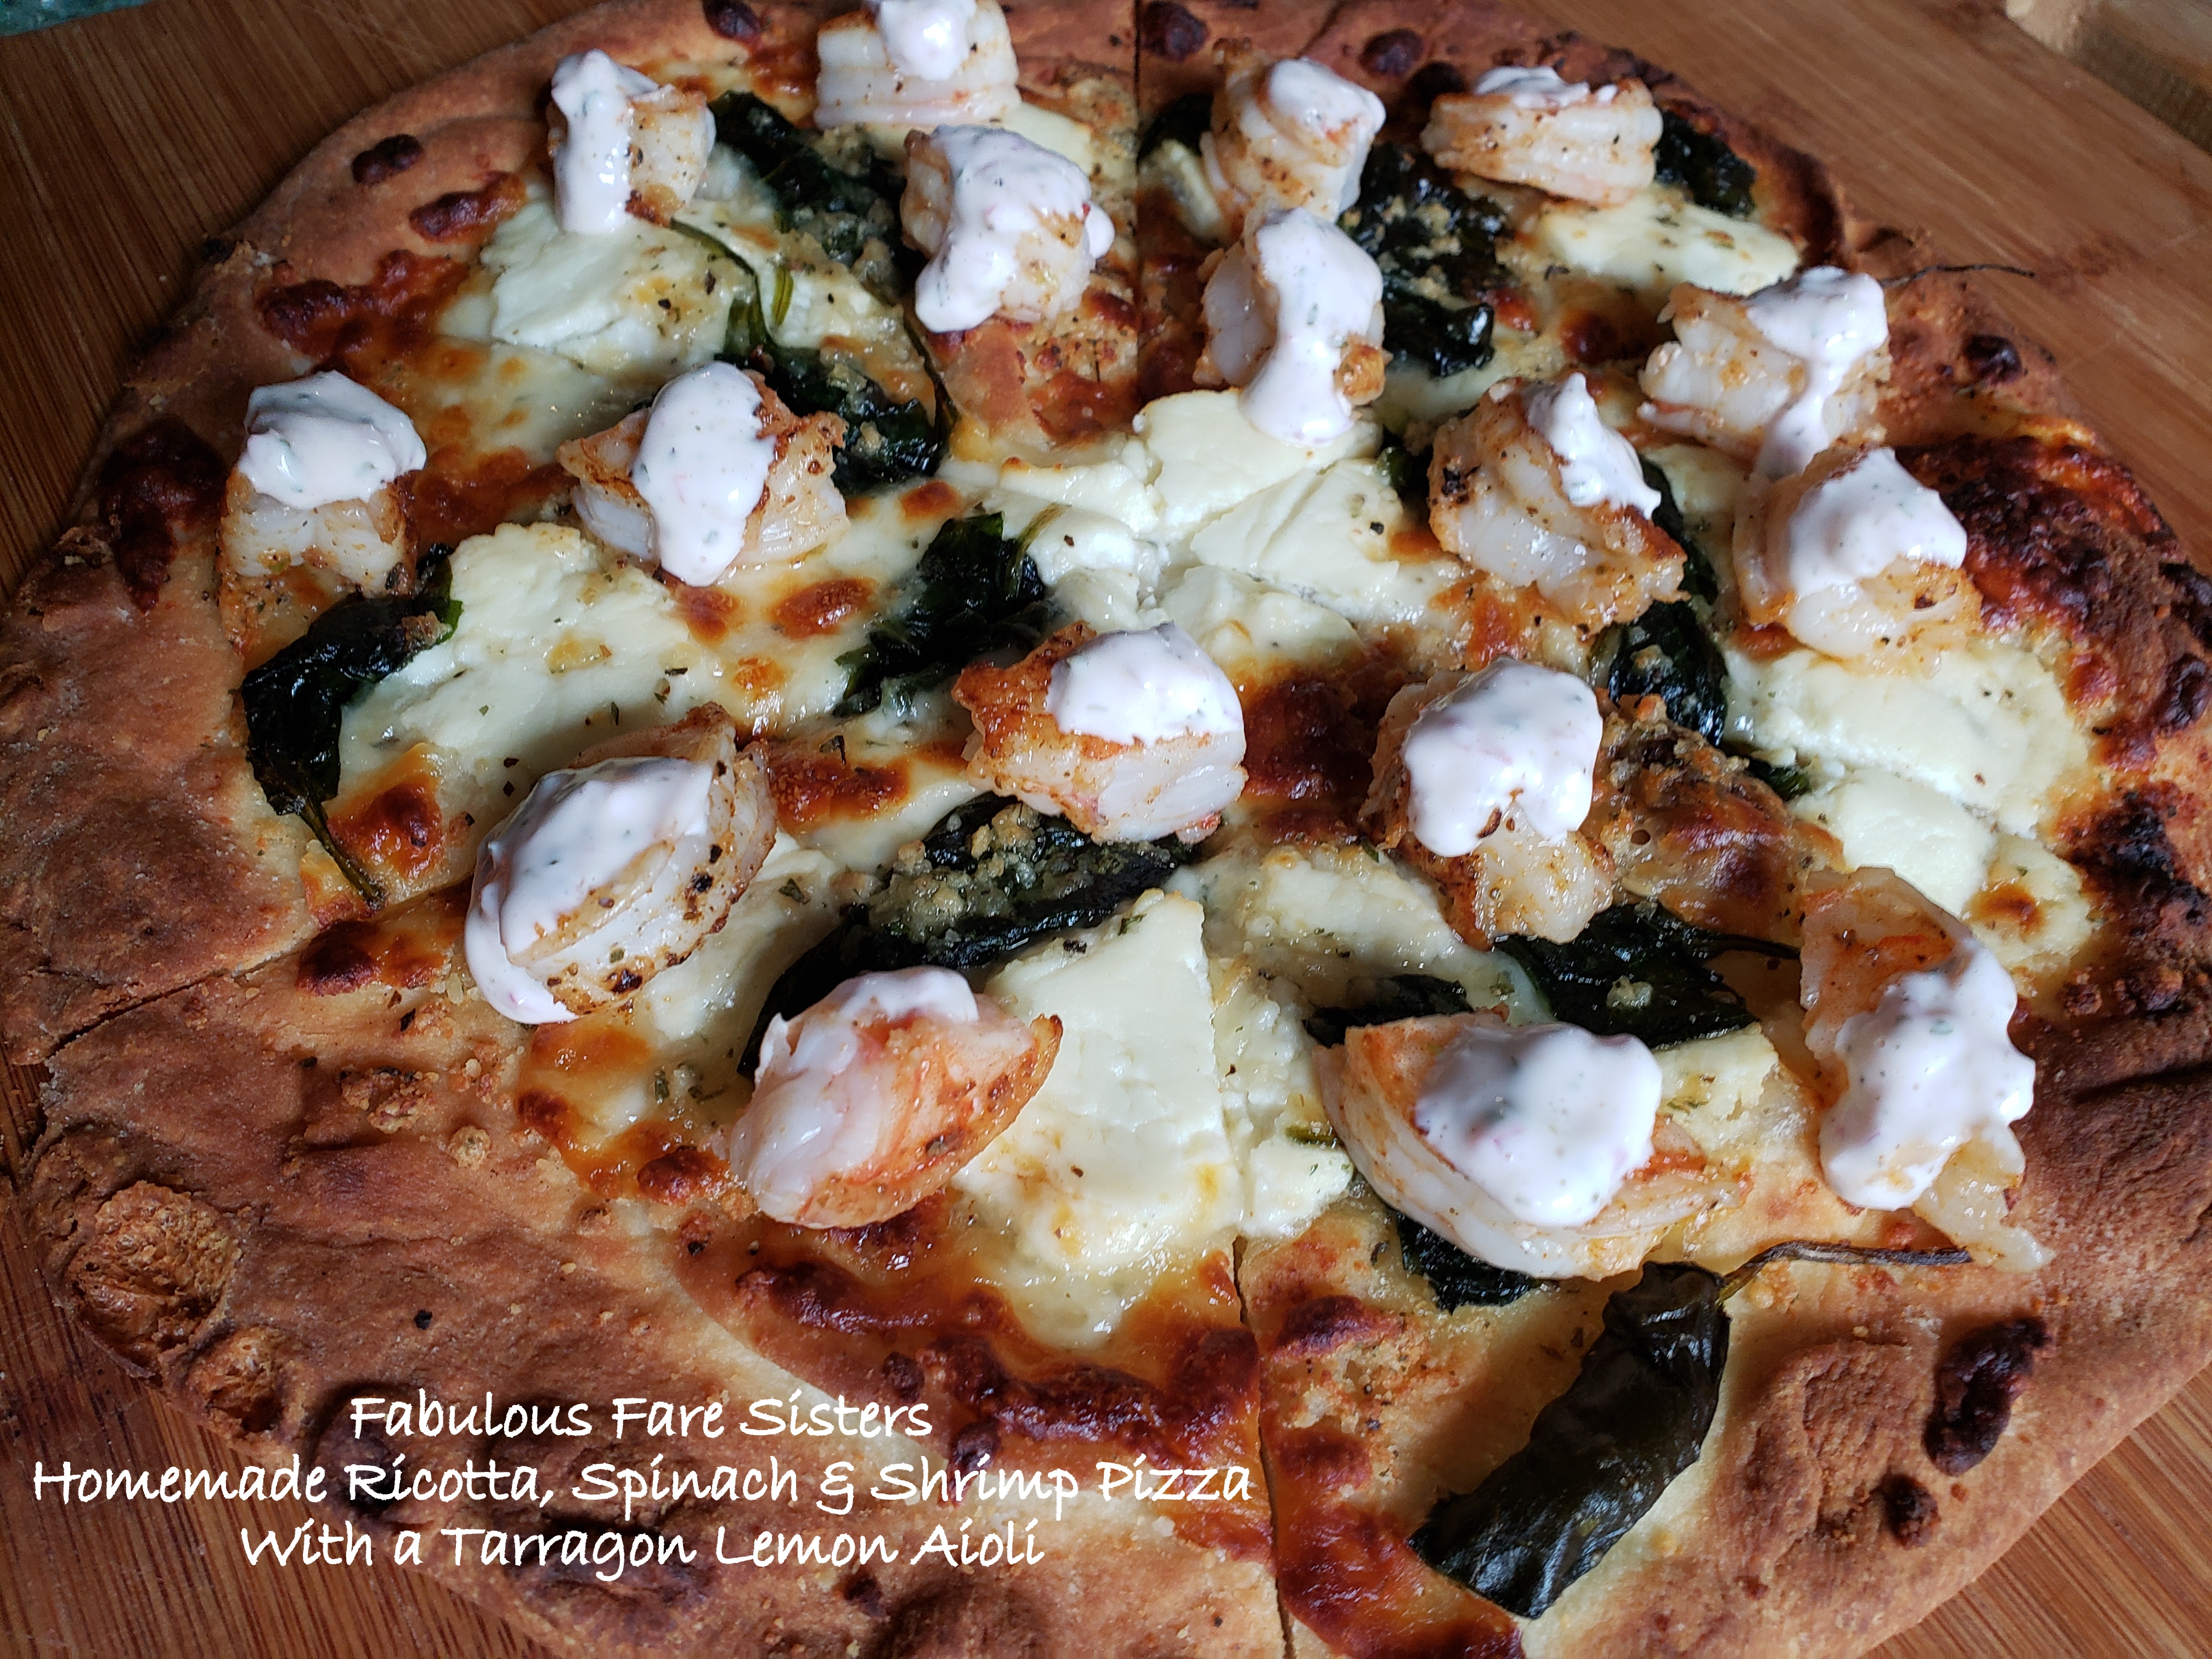 Homemade Ricotta, Spinach & Shrimp Pizza